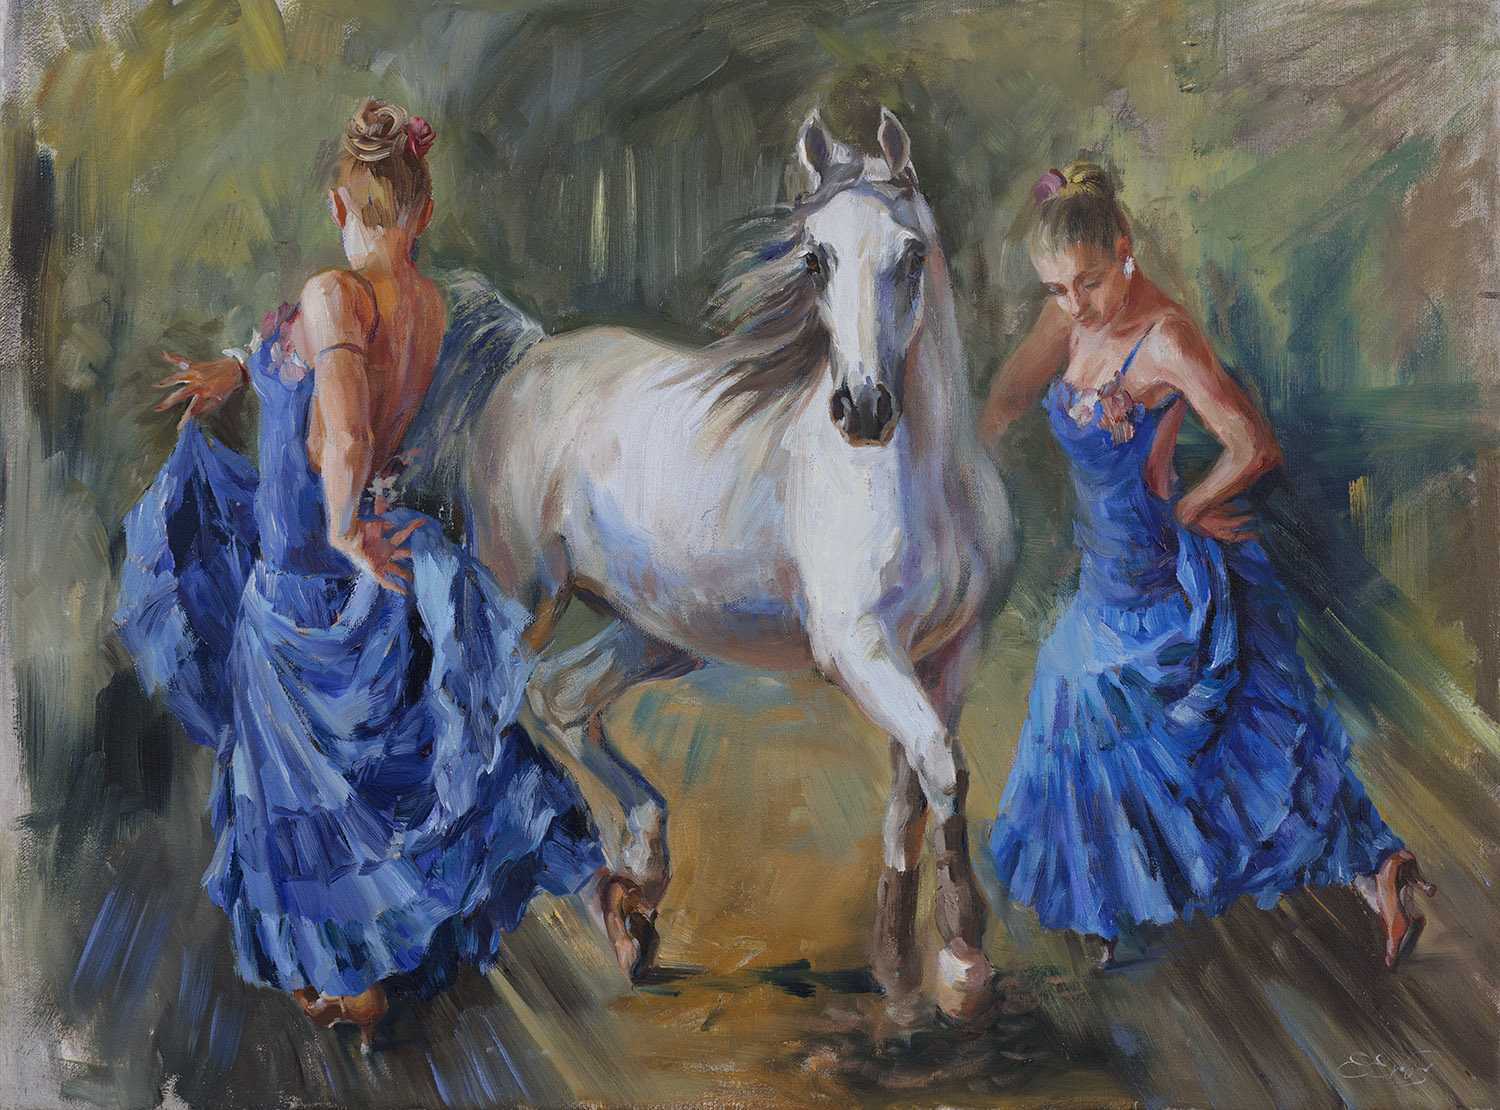 Jelena eros   elena eros rhapsody in blue oil on canvas 16 5x22 3500 o886vt